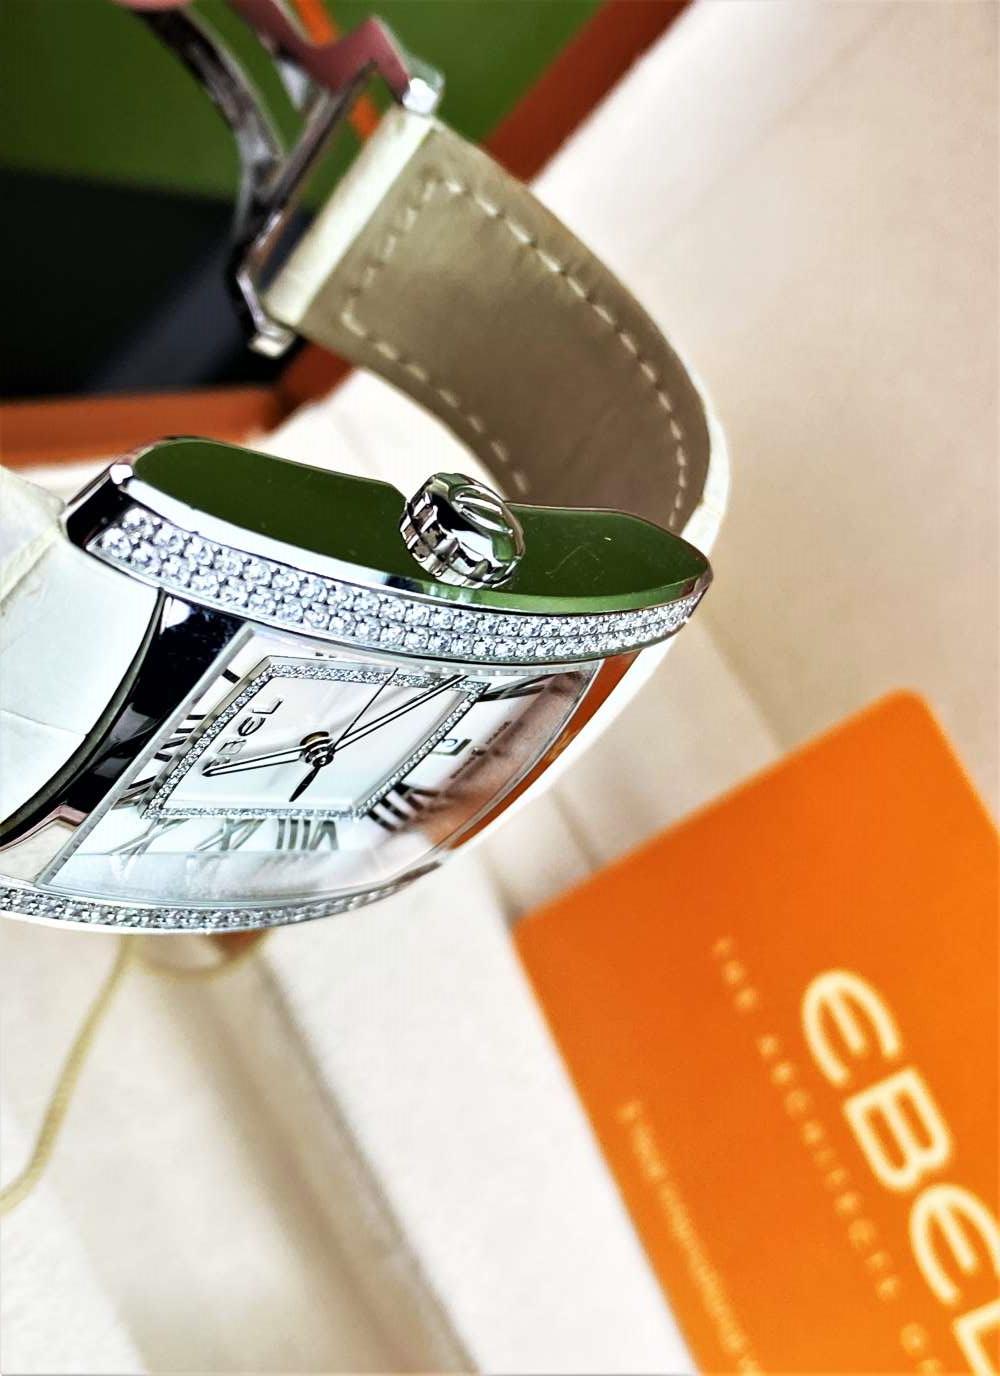 Ebel Brasilia Watch Double Diamond Factory Set Ltd Edition - Image 3 of 6